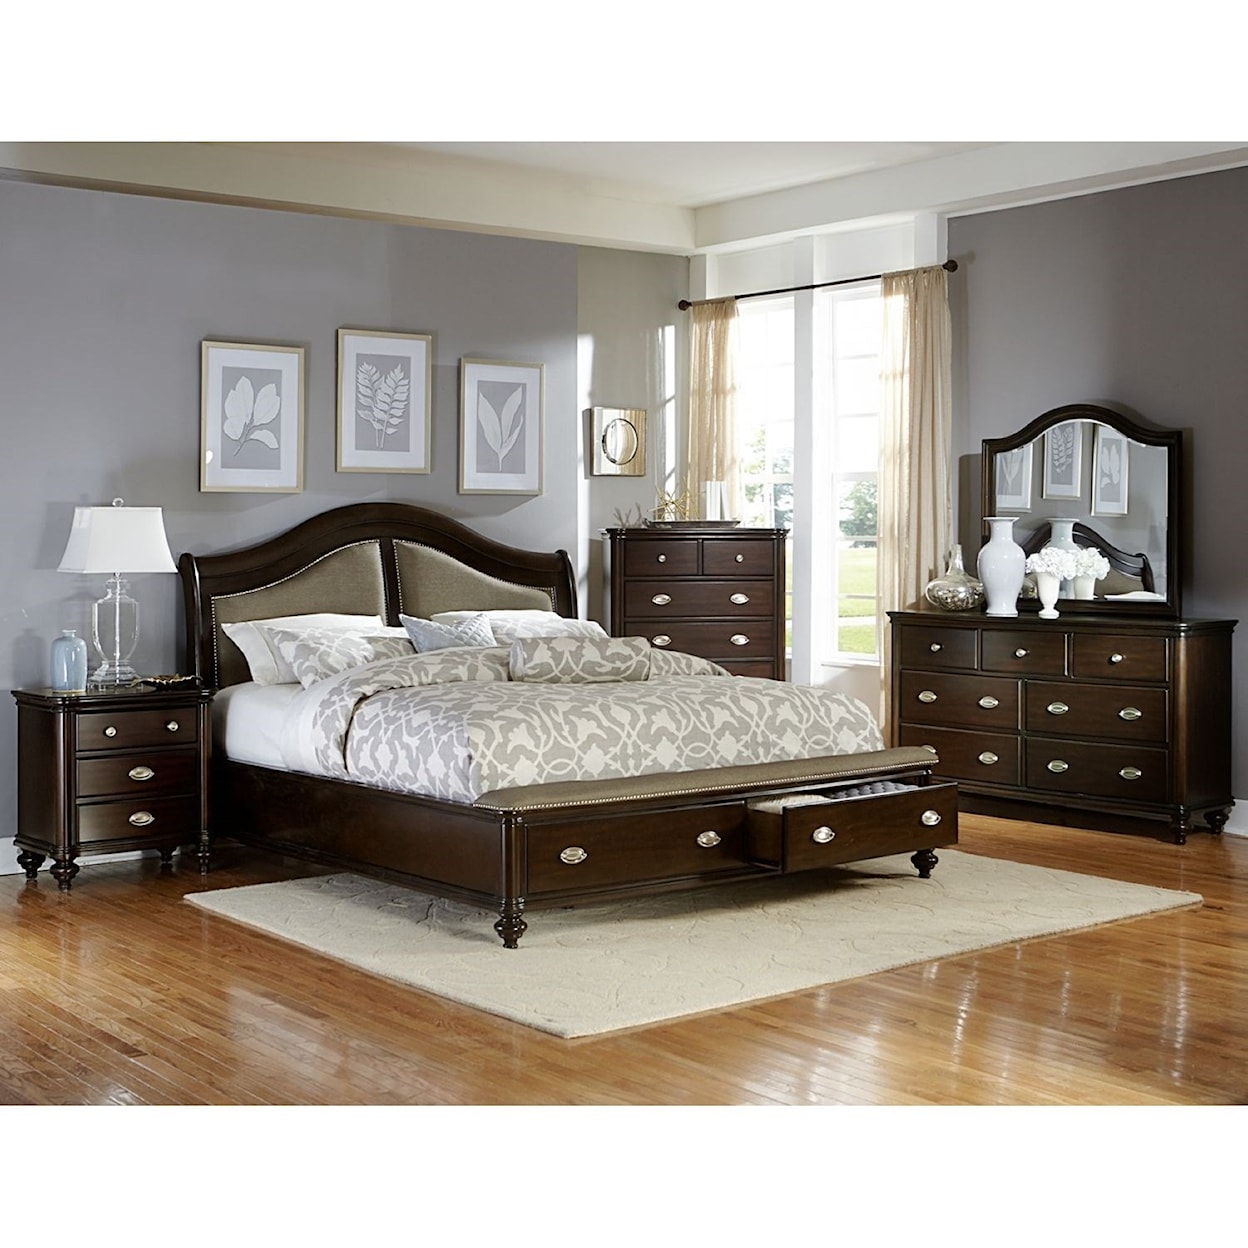 Homelegance Furniture Marston Queen Bedroom Group